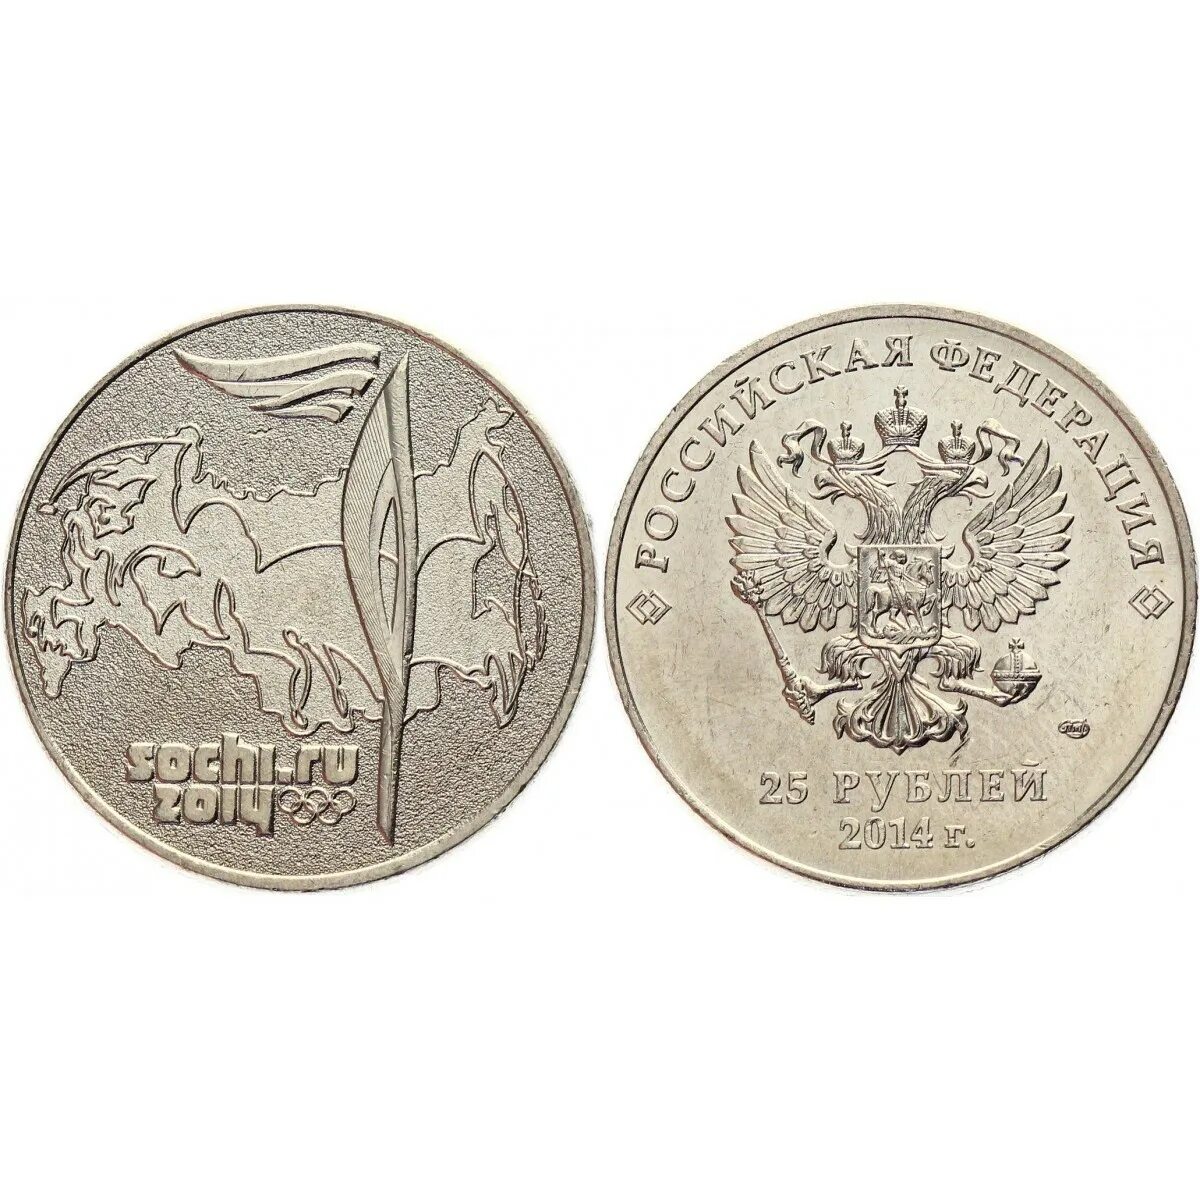 25 рублей сочи 2014 юбилейный